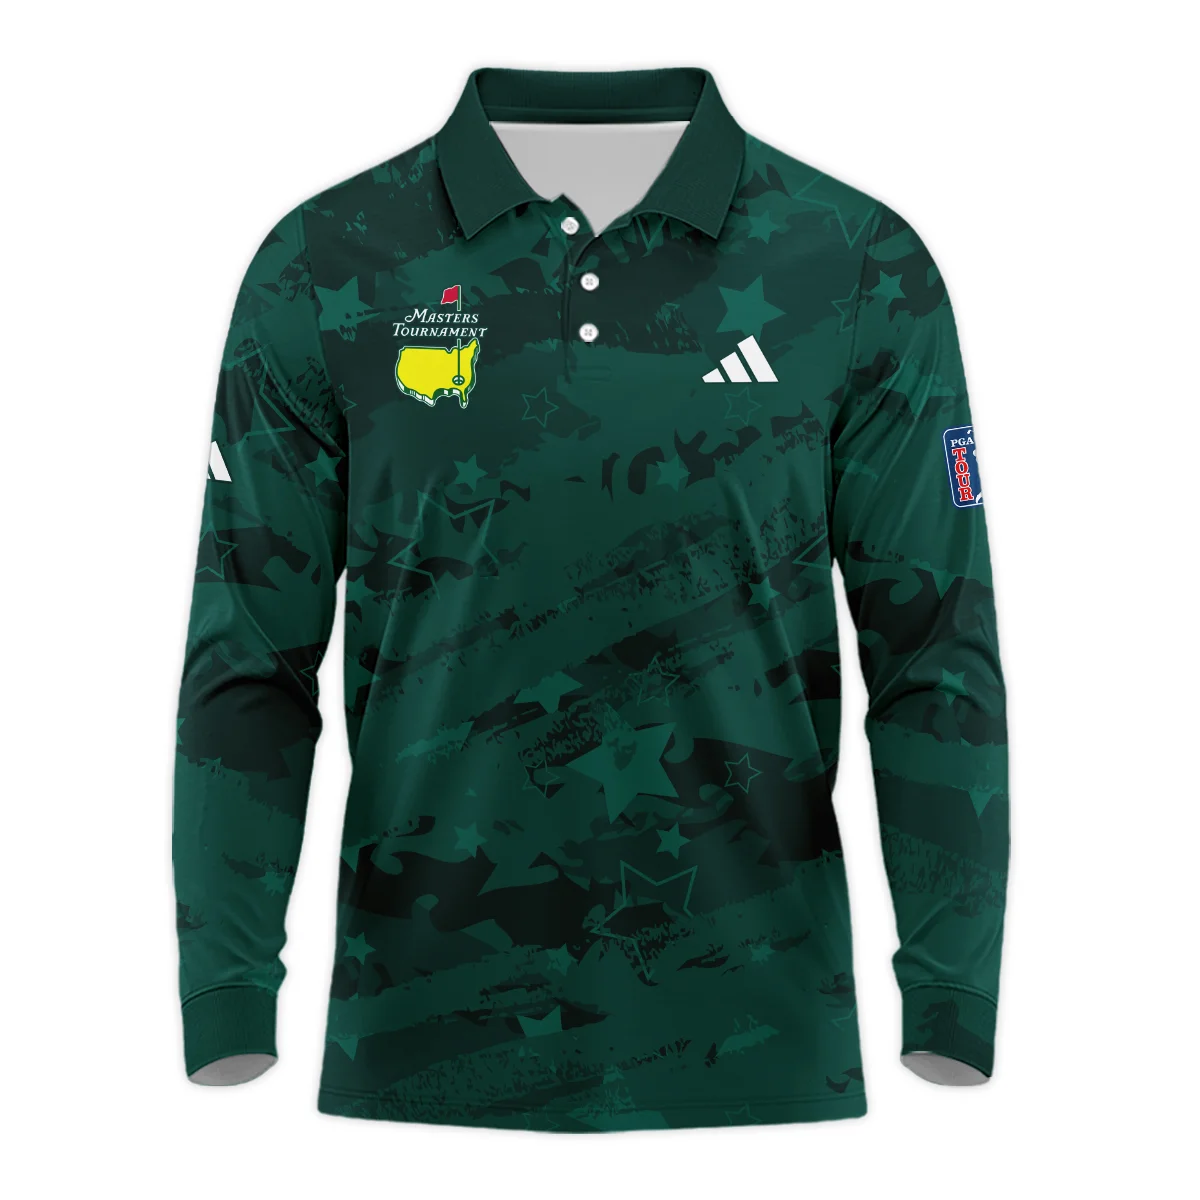 Dark Green Stars Pattern Grunge Background Masters Tournament Adidas Unisex Sweatshirt Style Classic Sweatshirt